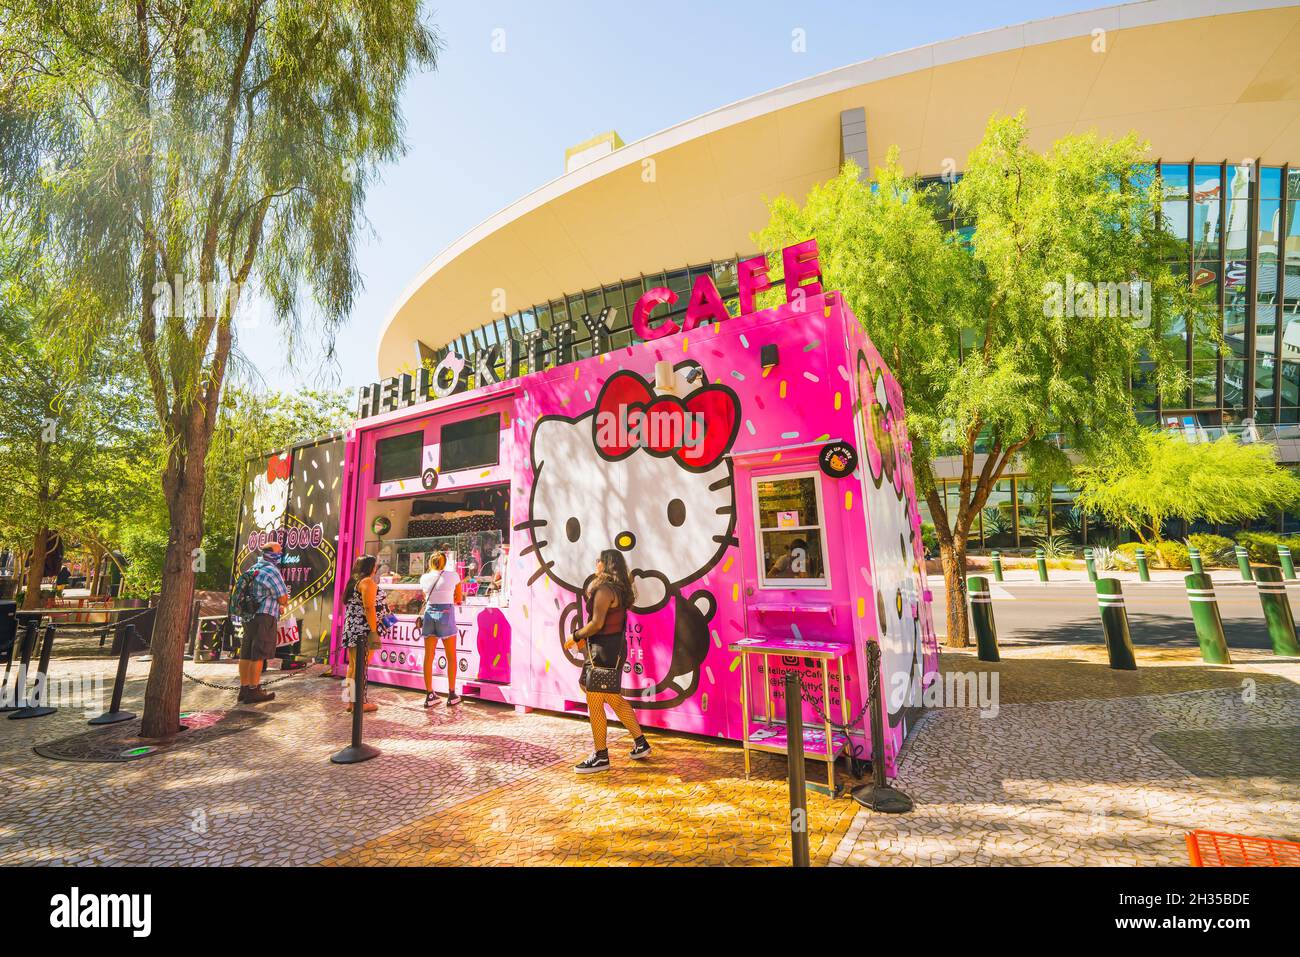 Hello Kitty Cafe opening on Las Vegas Strip — VIDEO